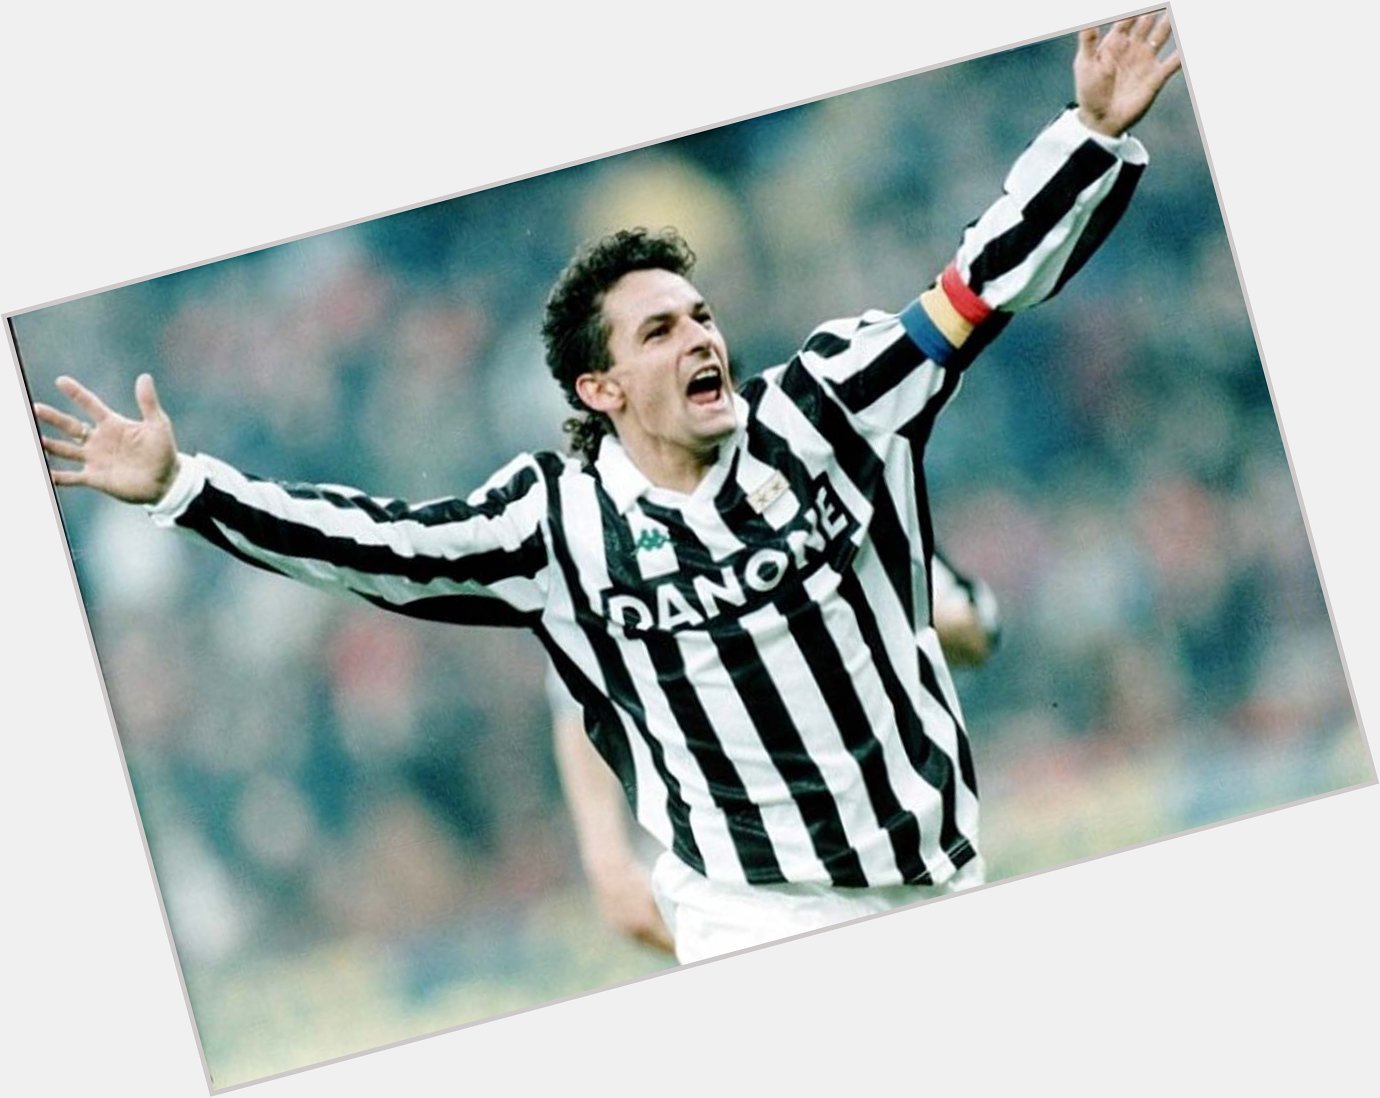 Happy birthday to Juventus legend Roberto Baggio, who turns 51 today.

Games: 200
Goals: 115 : 3 